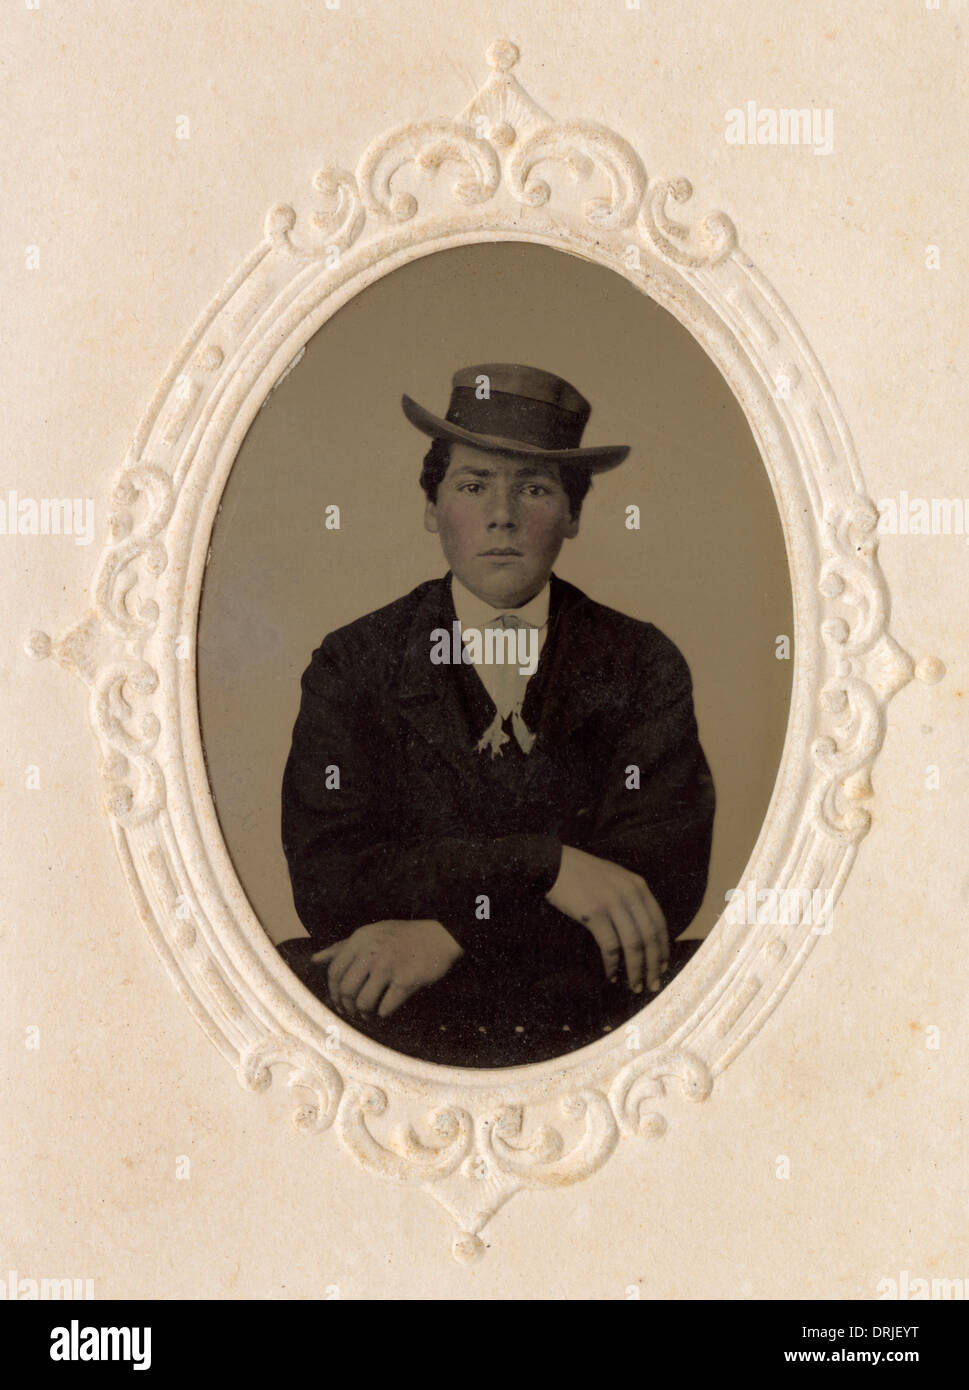 La guerra civile americana era Tintype fotografia Foto Stock